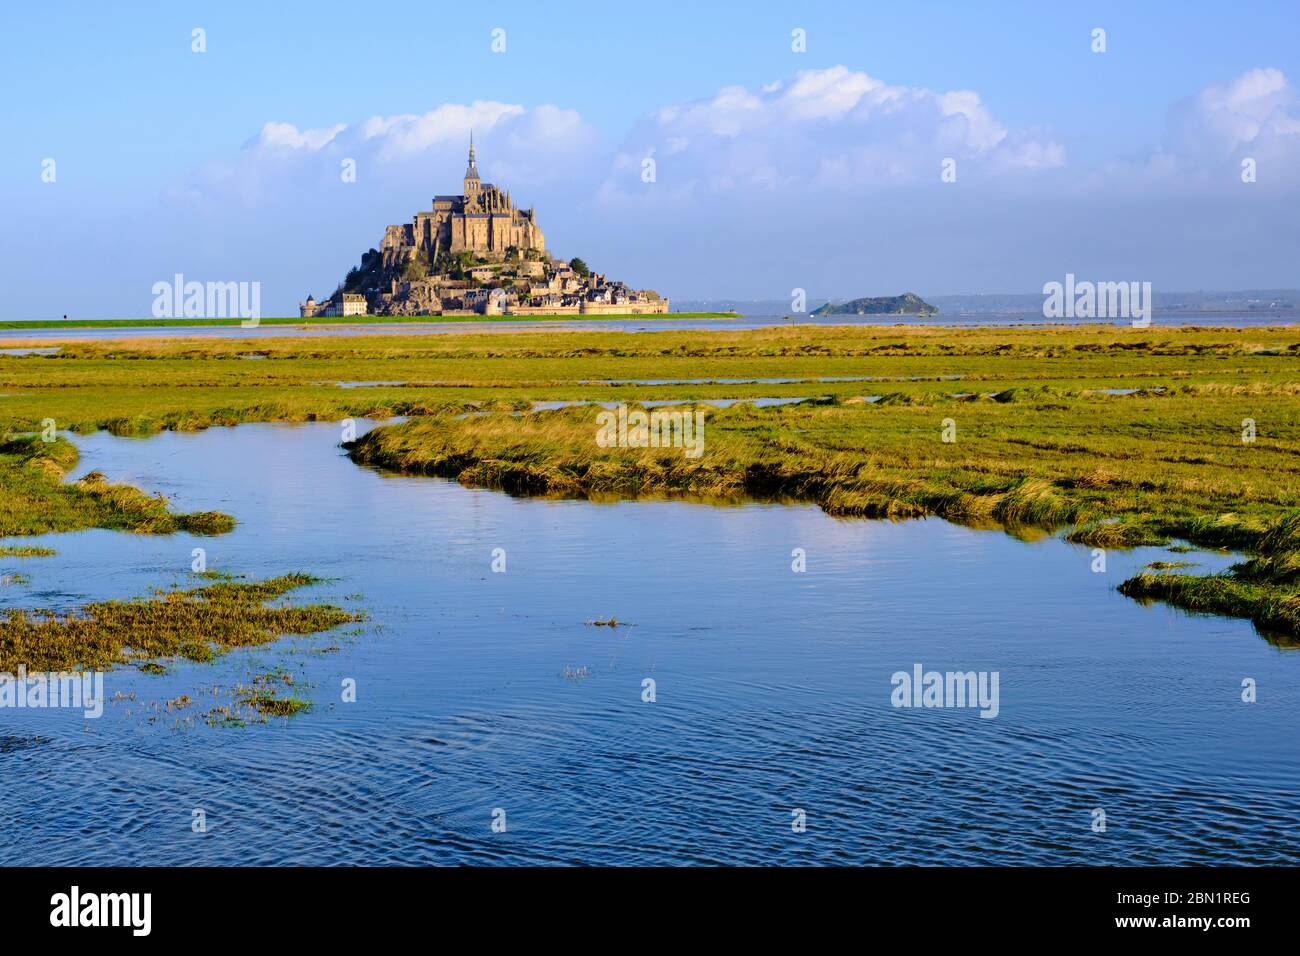 France, Normandy, Manche department, Bay of Mont Saint-Michel Unesco World Heritage, Abbey of Mont Saint-Michel Stock Photo